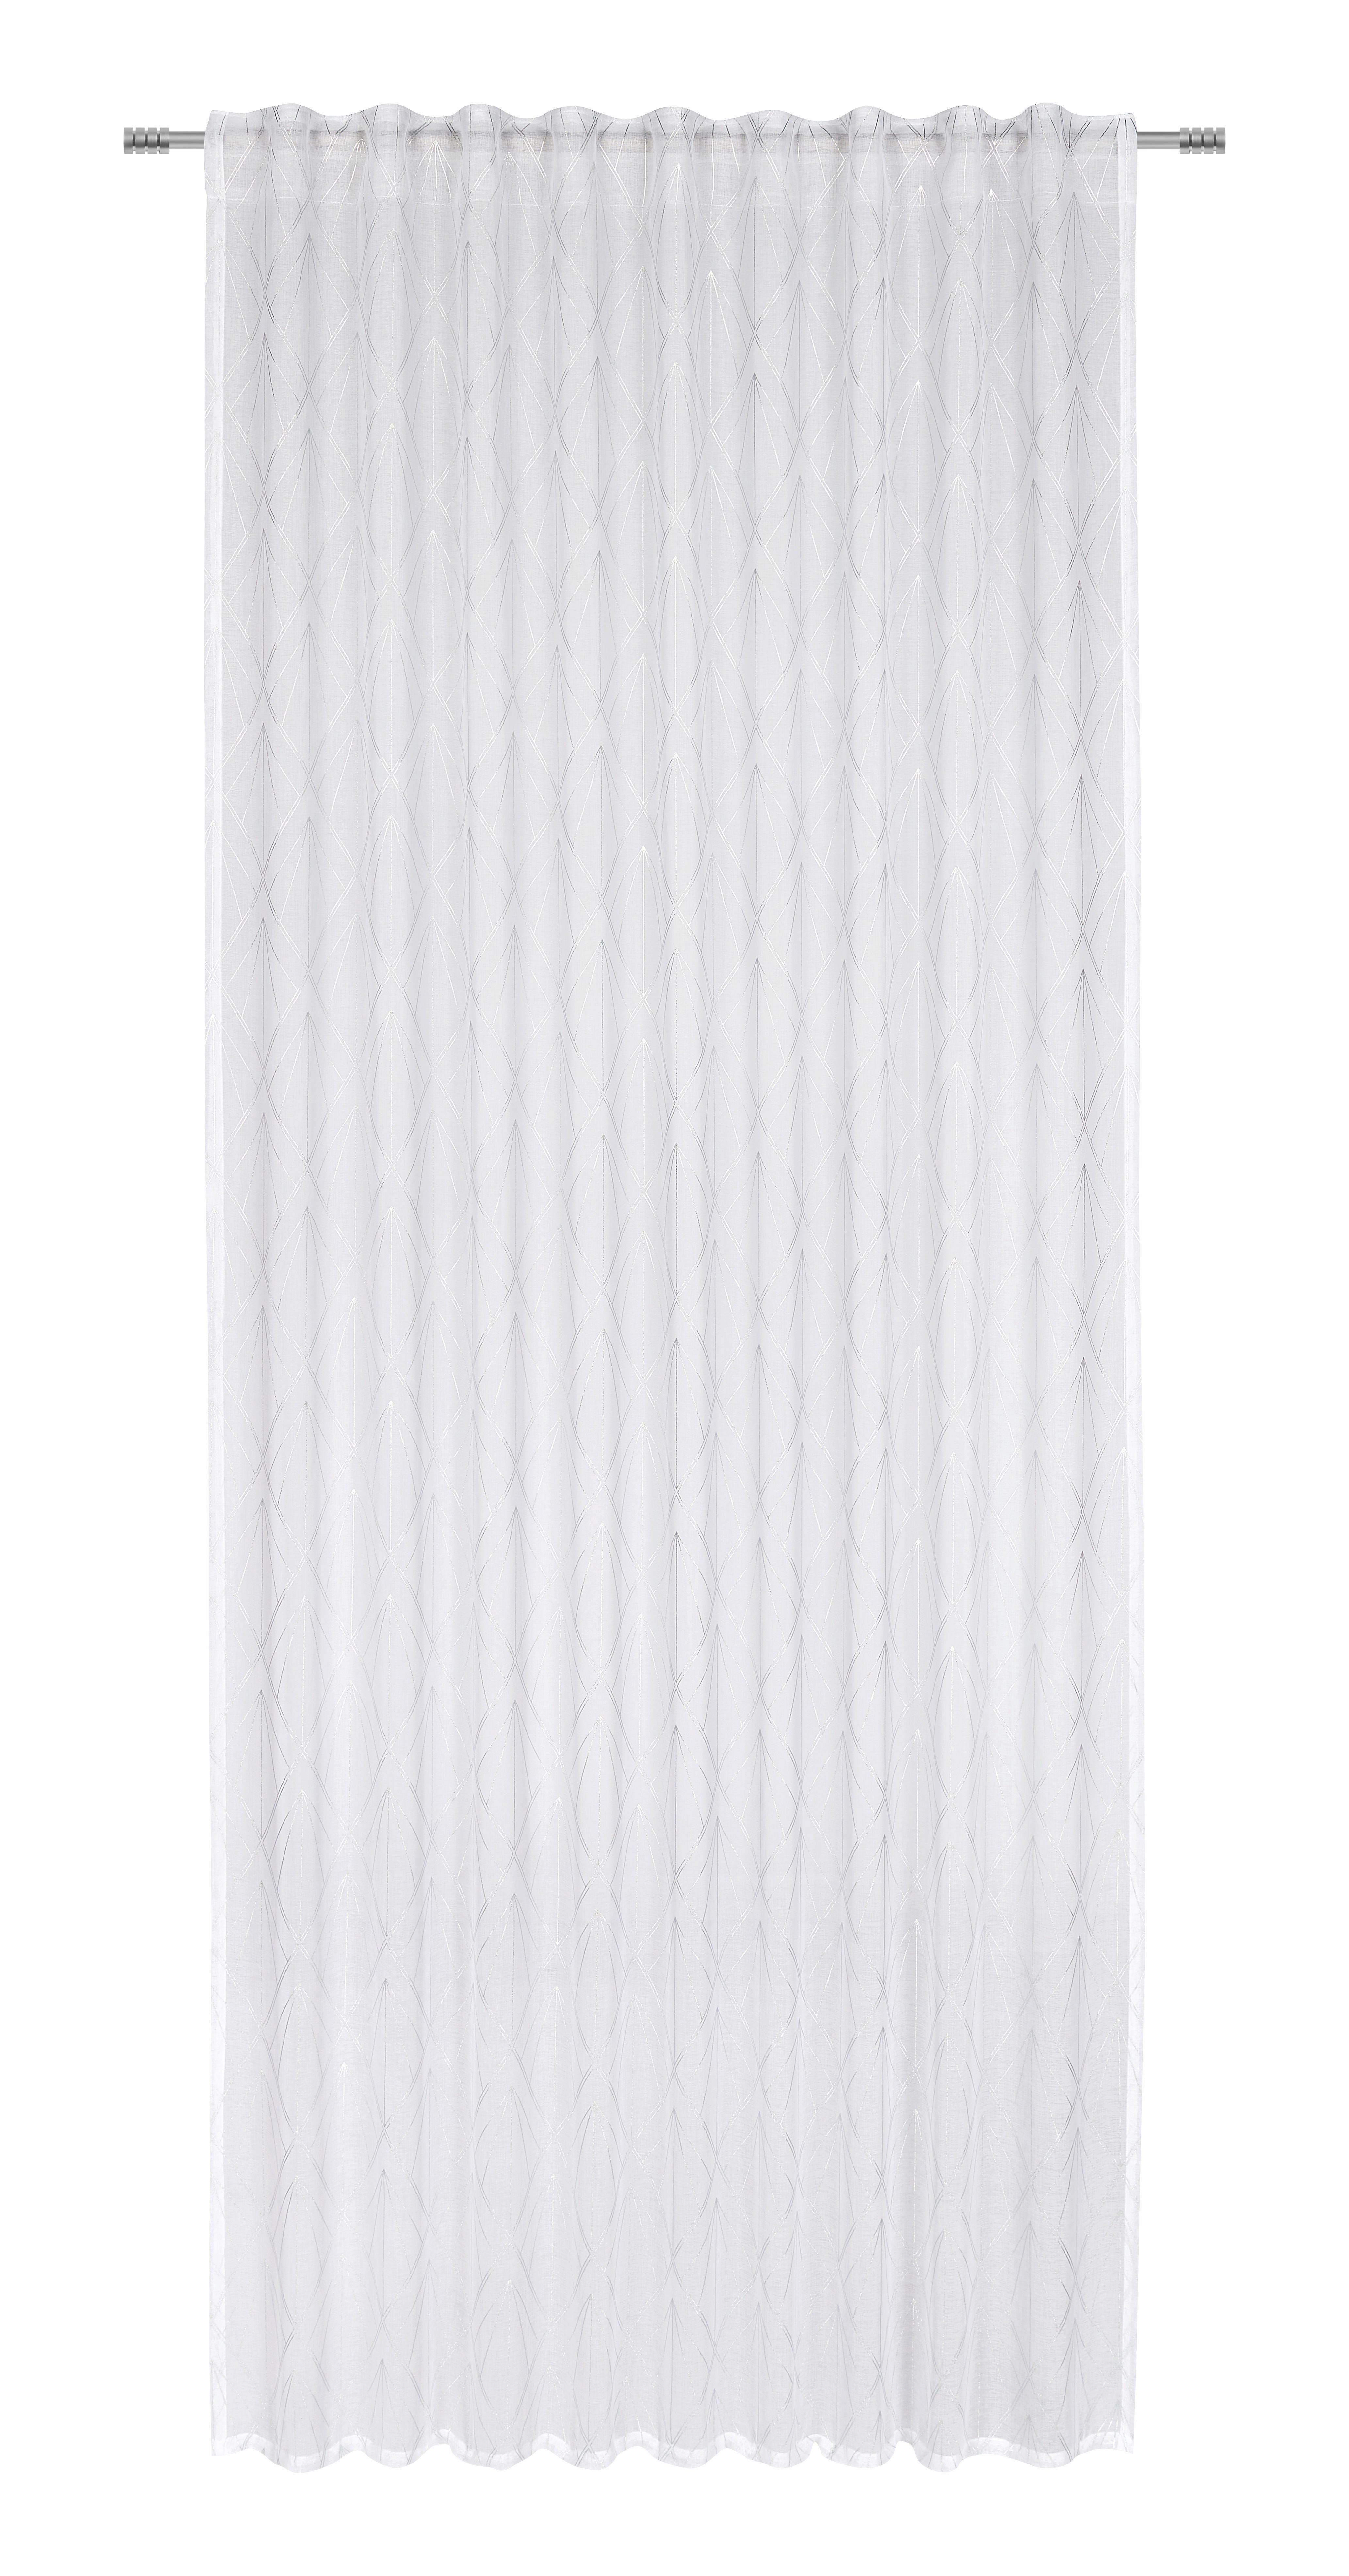 Gotova Zavjesa Esther - bijela/srebrne boje, Romantik / Landhaus, tekstil (135/245cm) - Modern Living